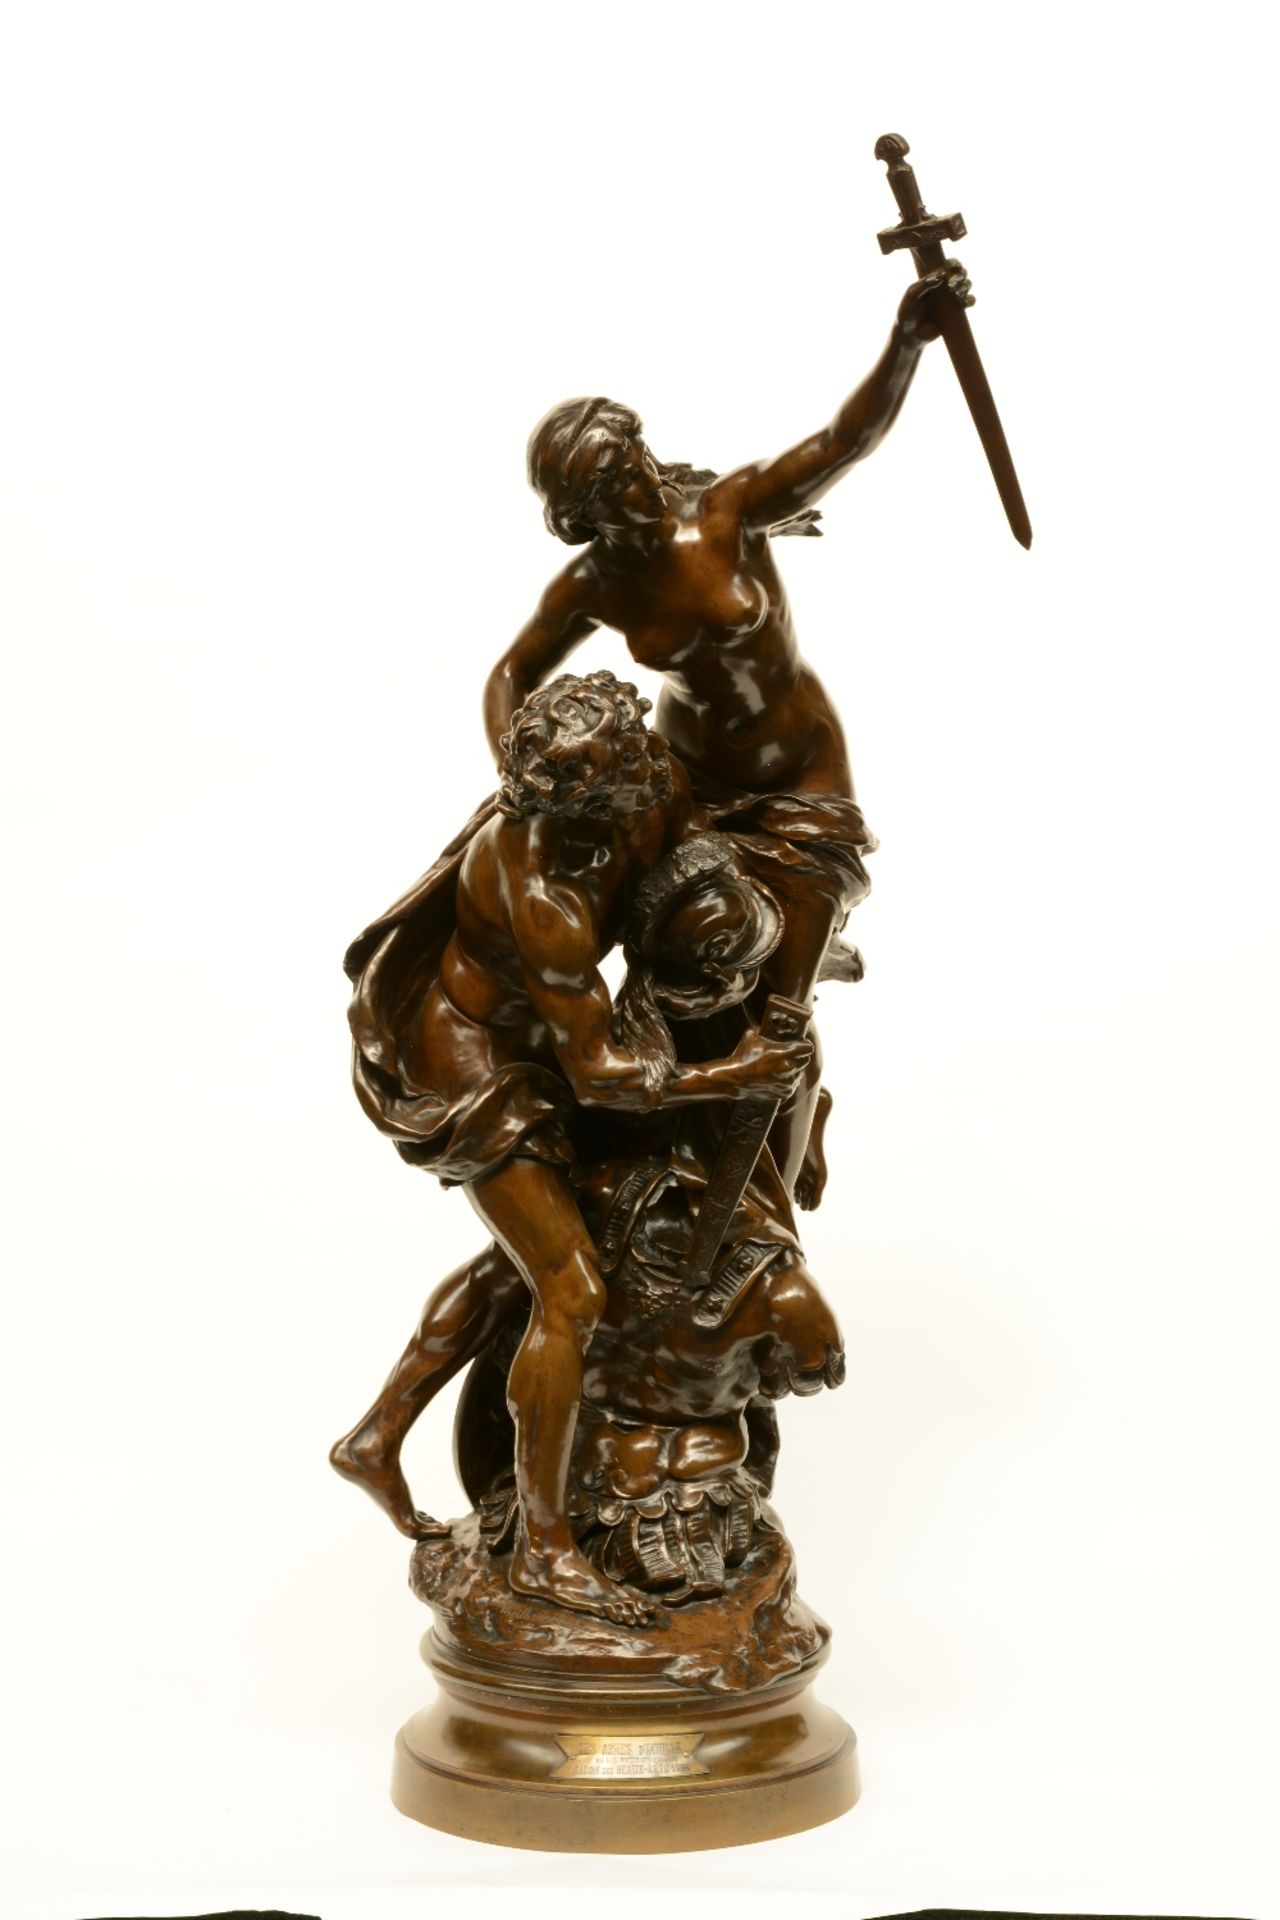 Moreau Mathurin, 'Les armes d'Achilles', patinated bronze, 19thC, H 130 cm; added, the matching